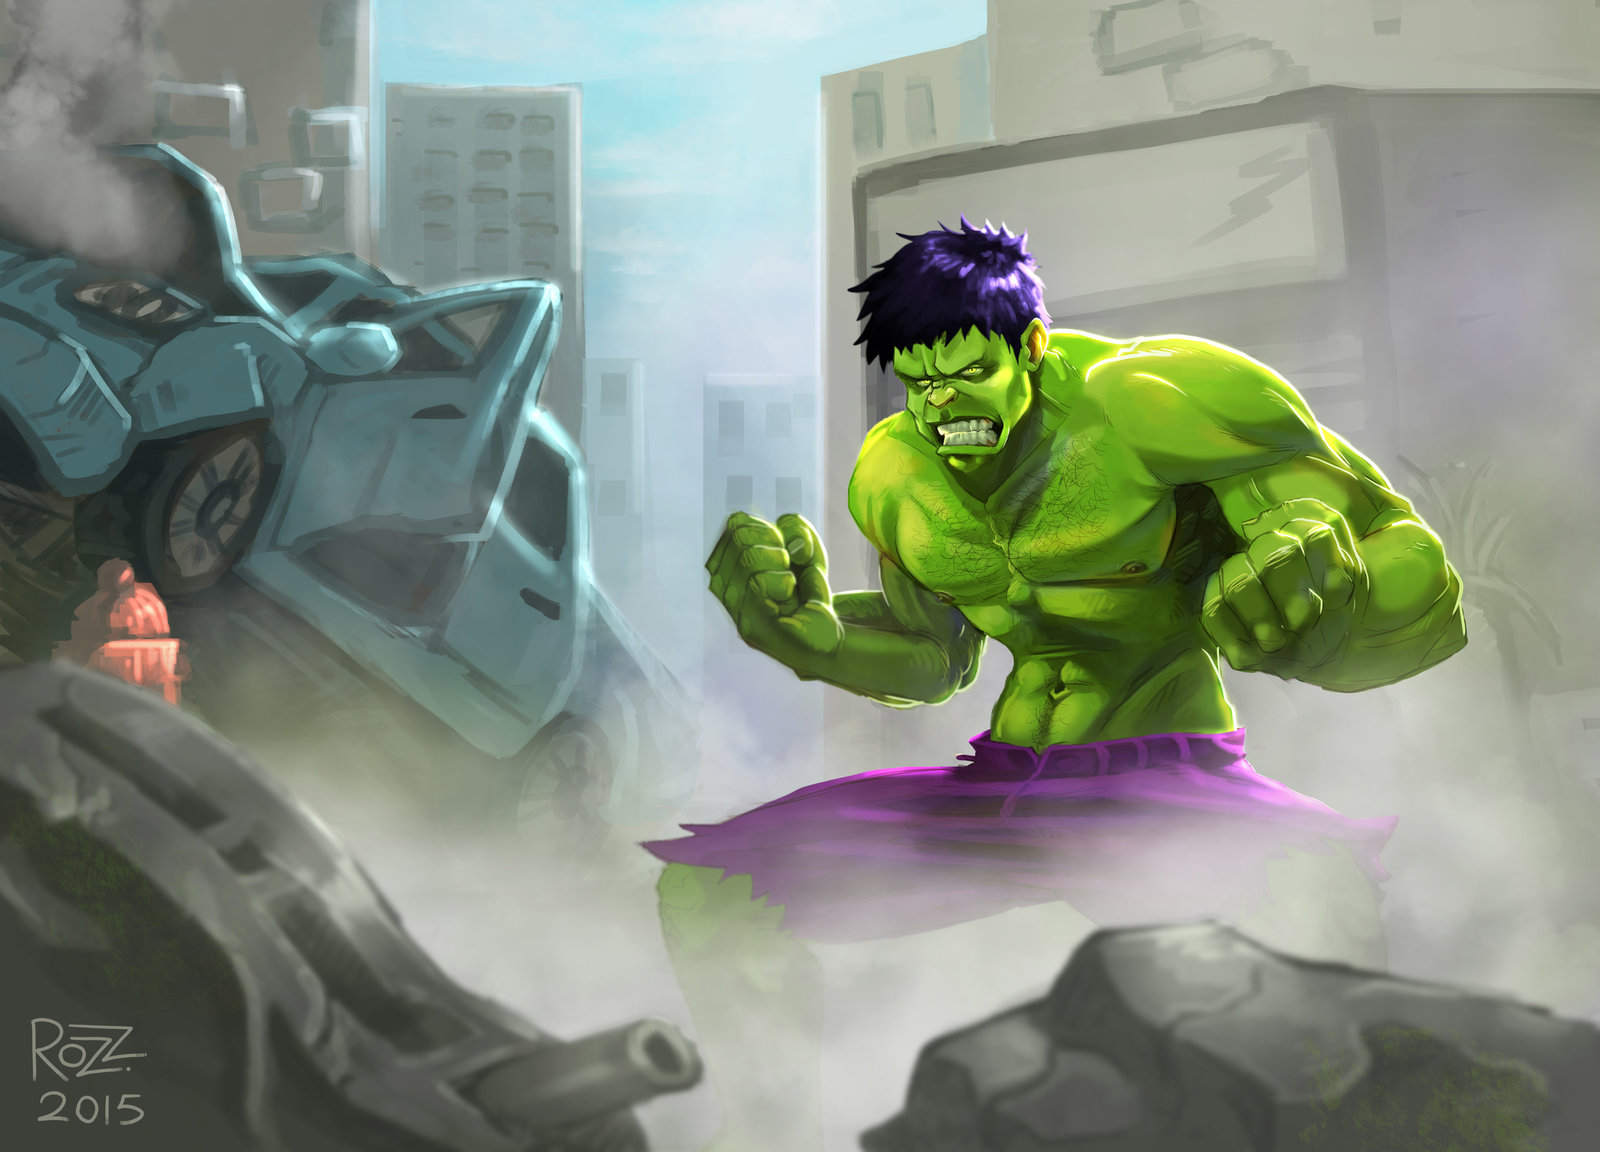 The Hulk 